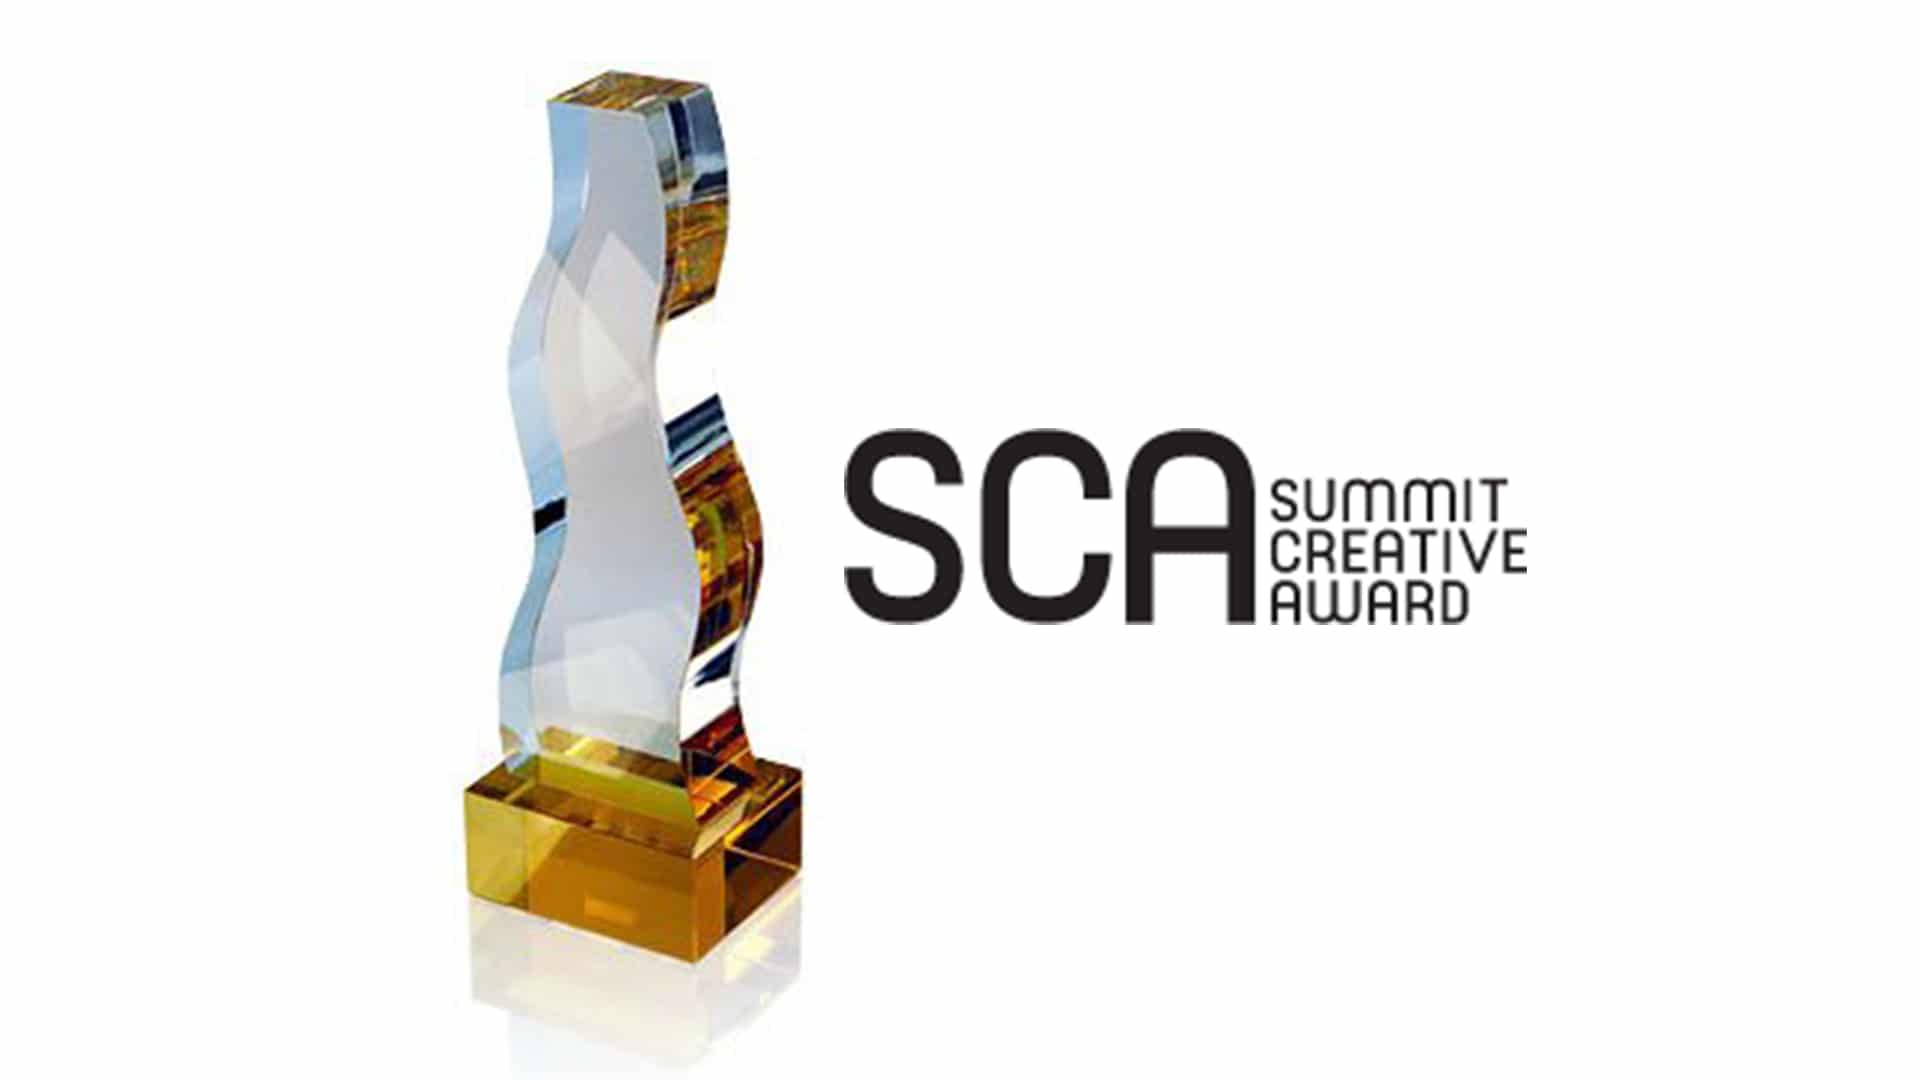 SCA Summit Creative Award